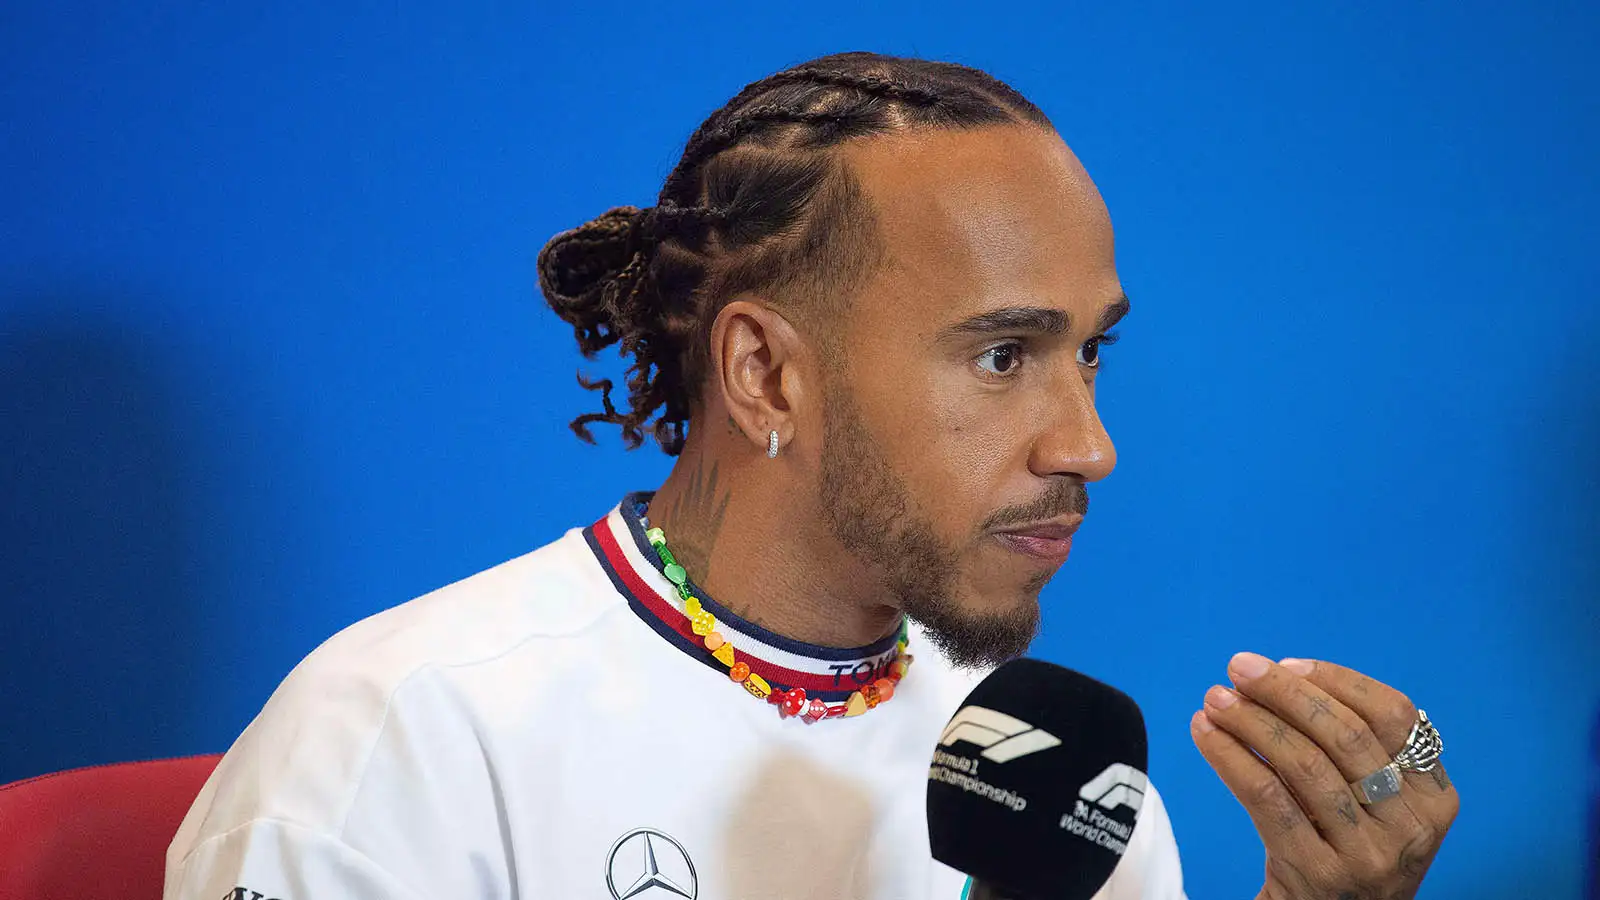 Lewis Hamilton at press conference. Austin, Texas, October 2022